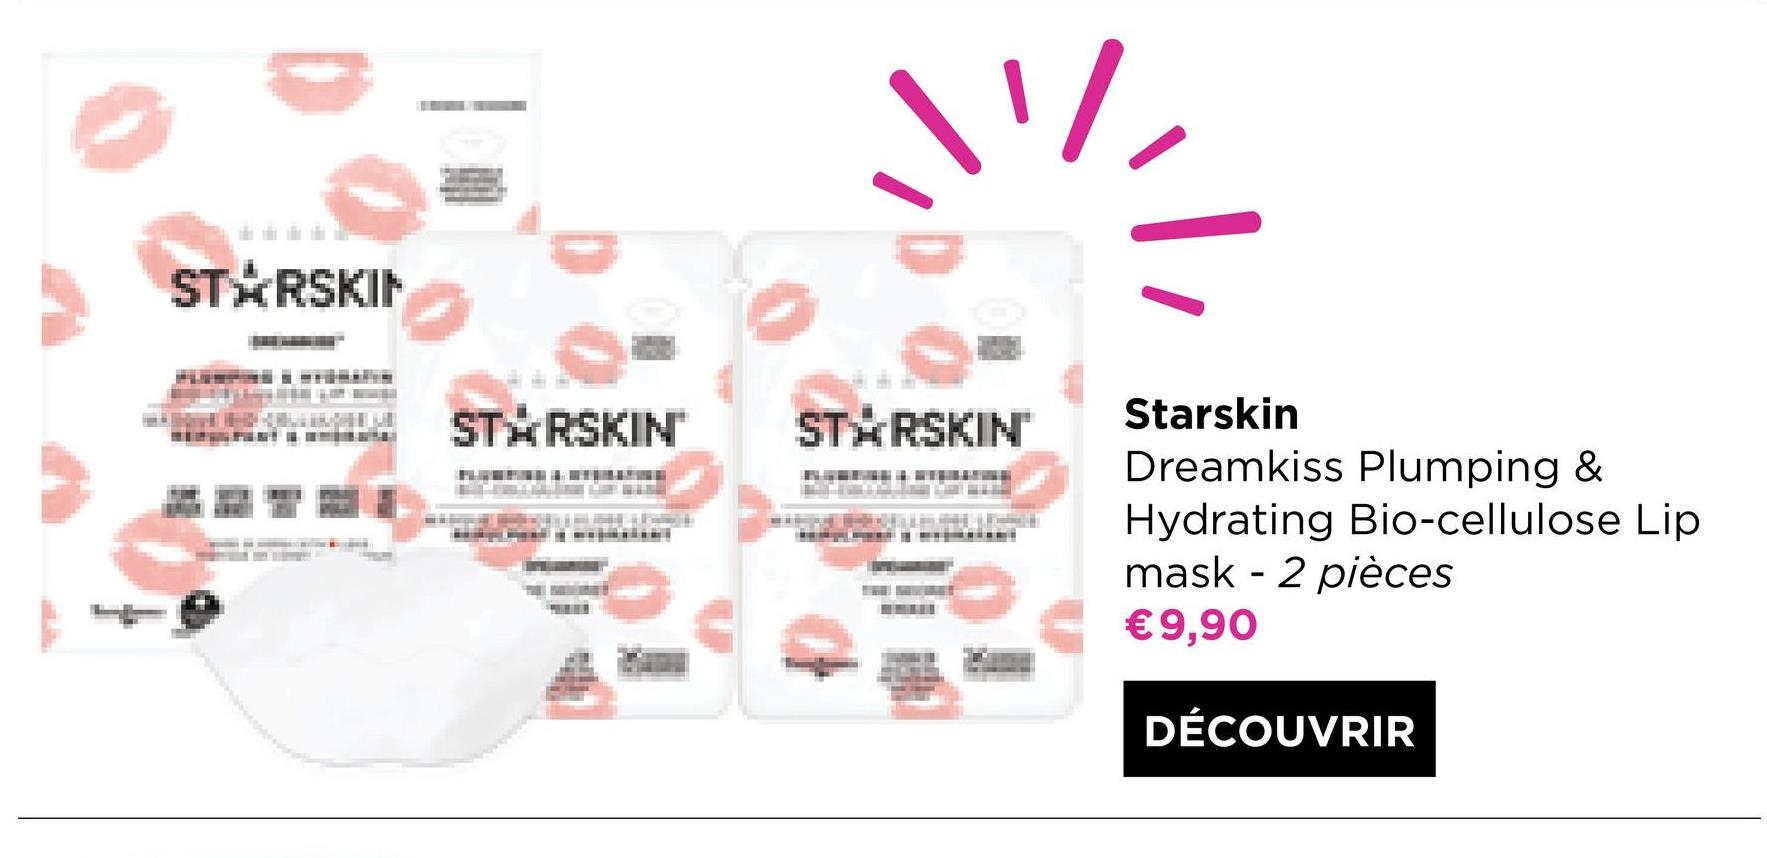 STÅRSKIH
STÅRSKIN
STXRSKIN
Starskin
Dreamkiss Plumping &
Hydrating Bio-cellulose Lip
mask - 2 pièces
€9,90
-
DÉCOUVRIR
